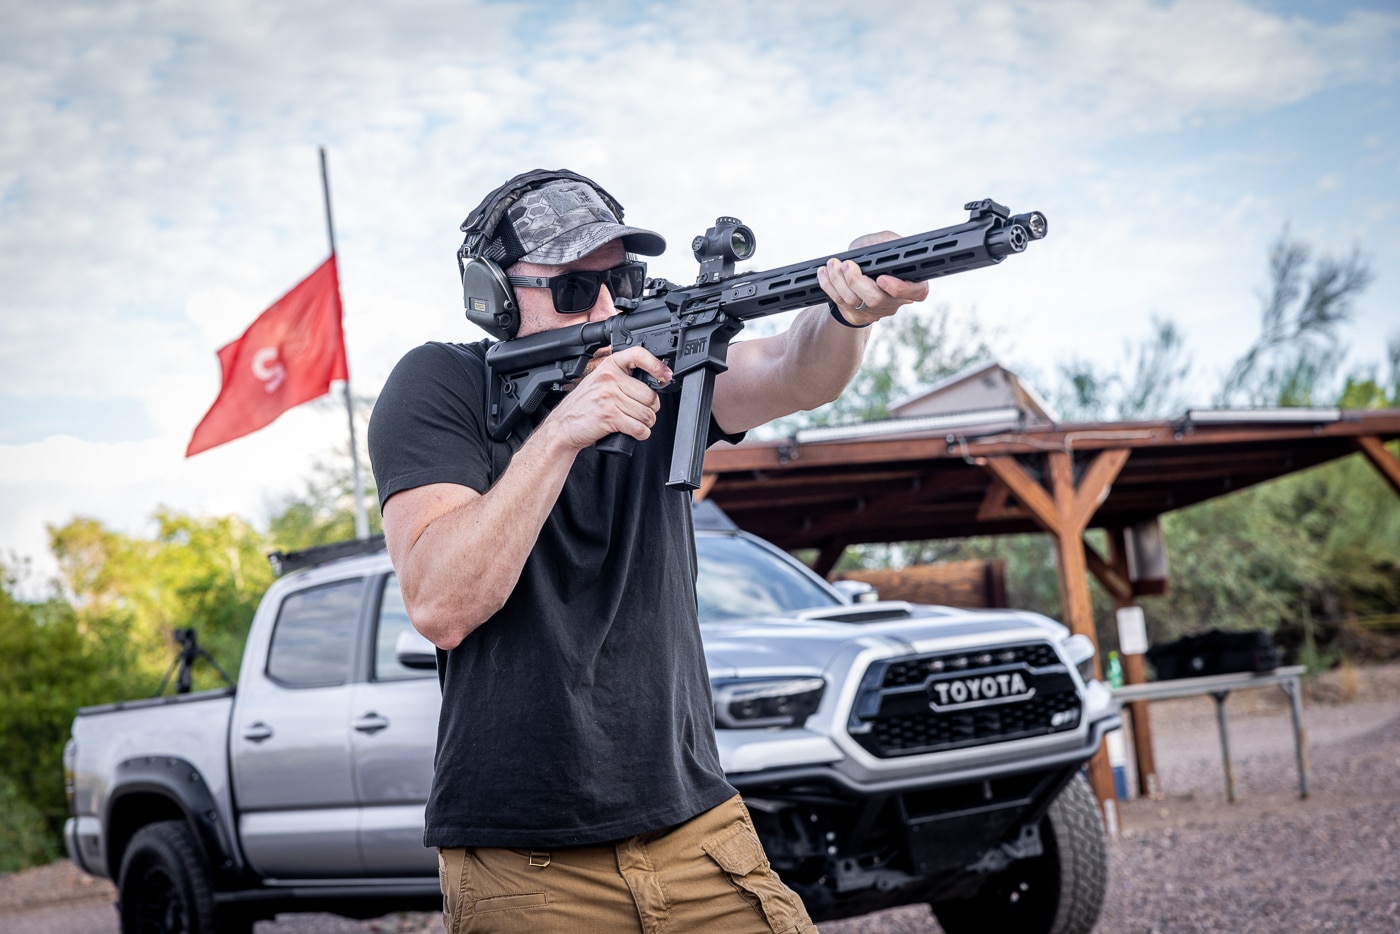 shooting the 9mm carbine saint on the range